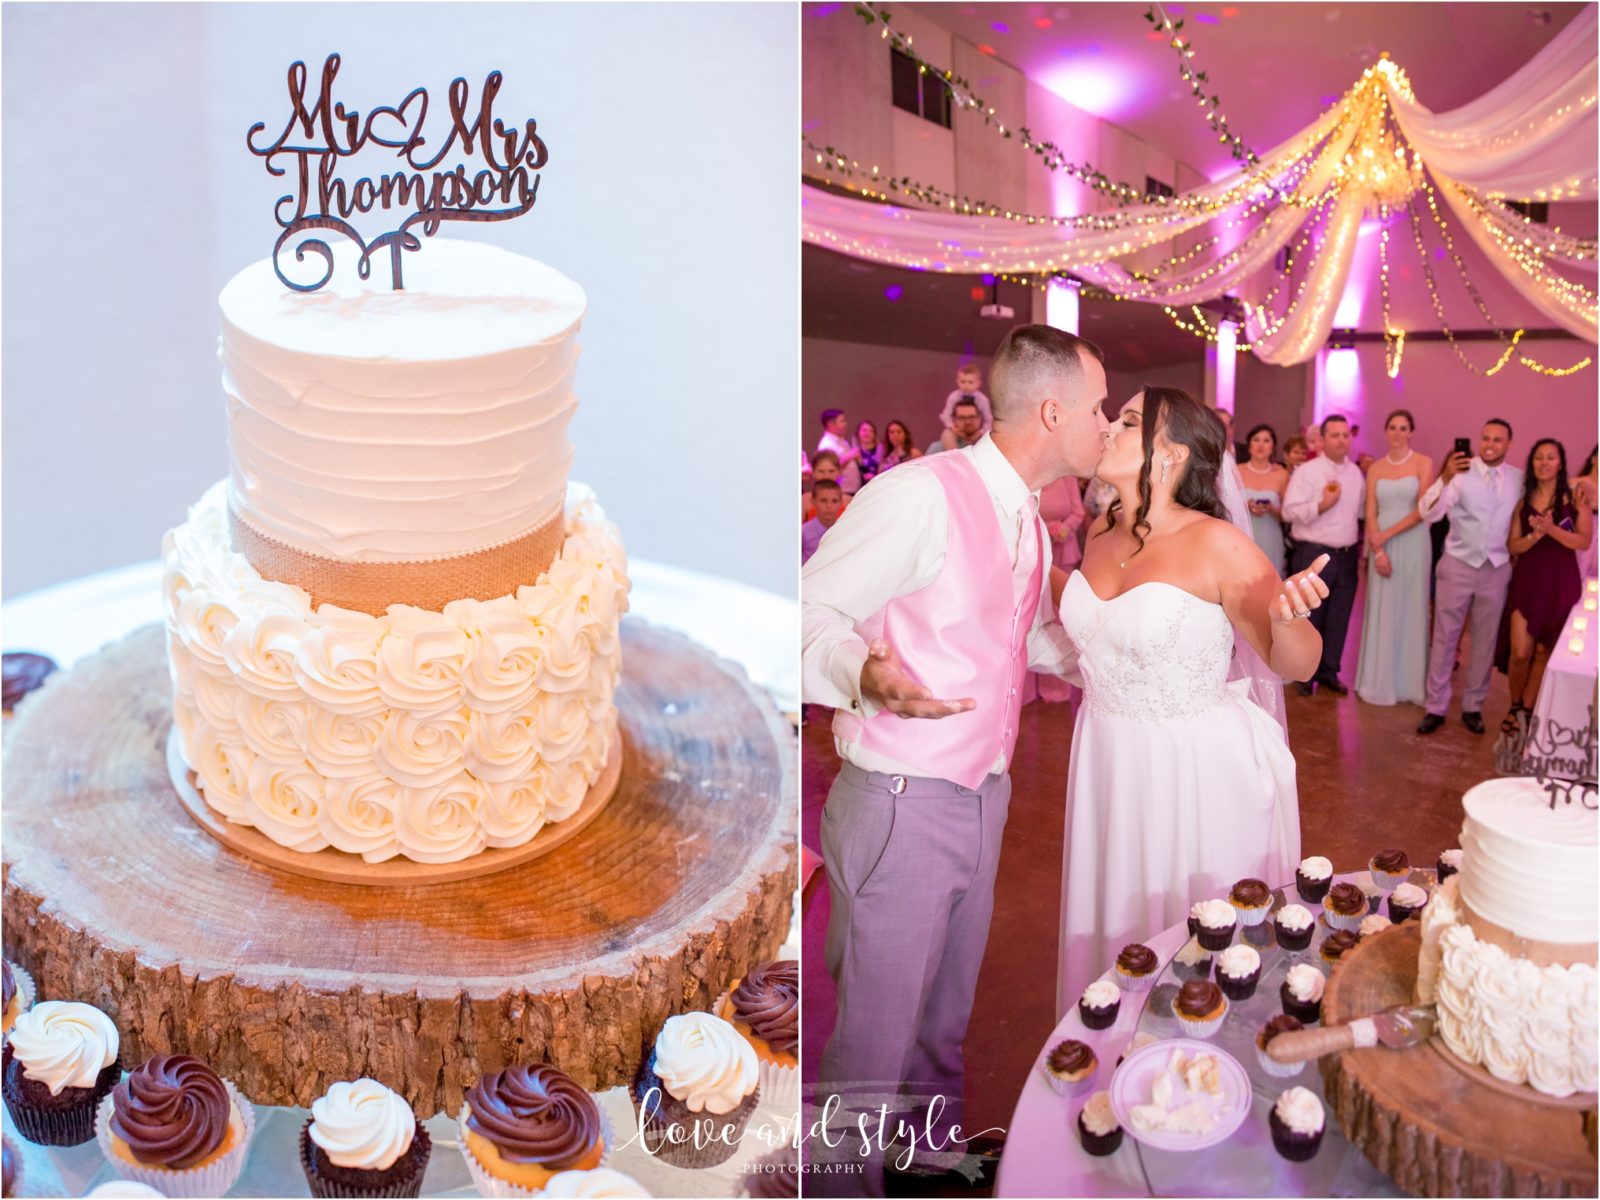 Bakers Ranch Wedding Love lock bridge bride and groom cutting the wedding cake